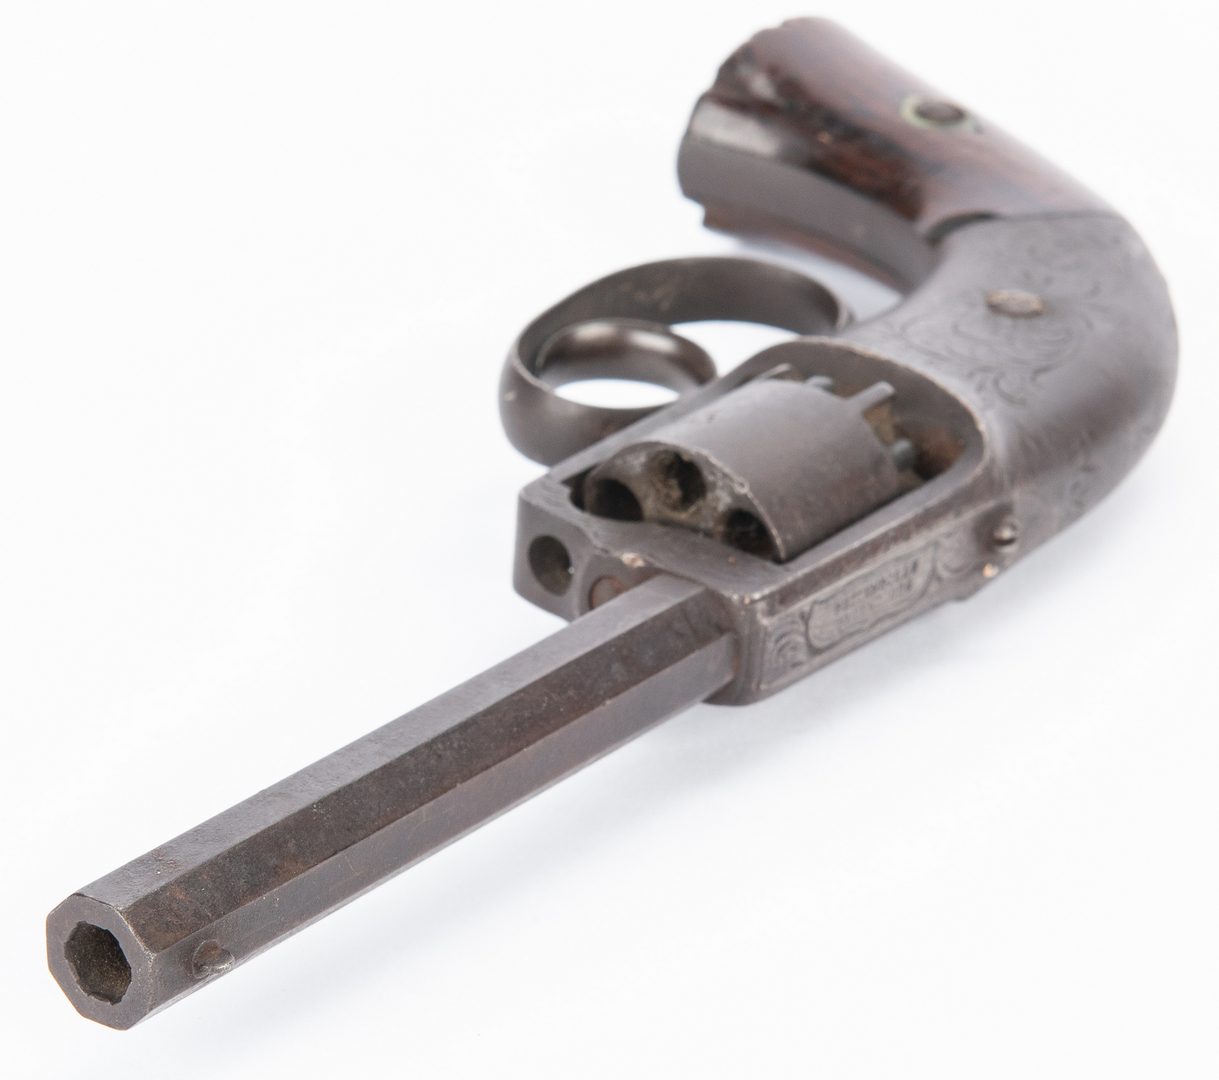 Lot 395: Civil War era C.S. Pettengill DA Navy Model Revolver, .34 Cal.